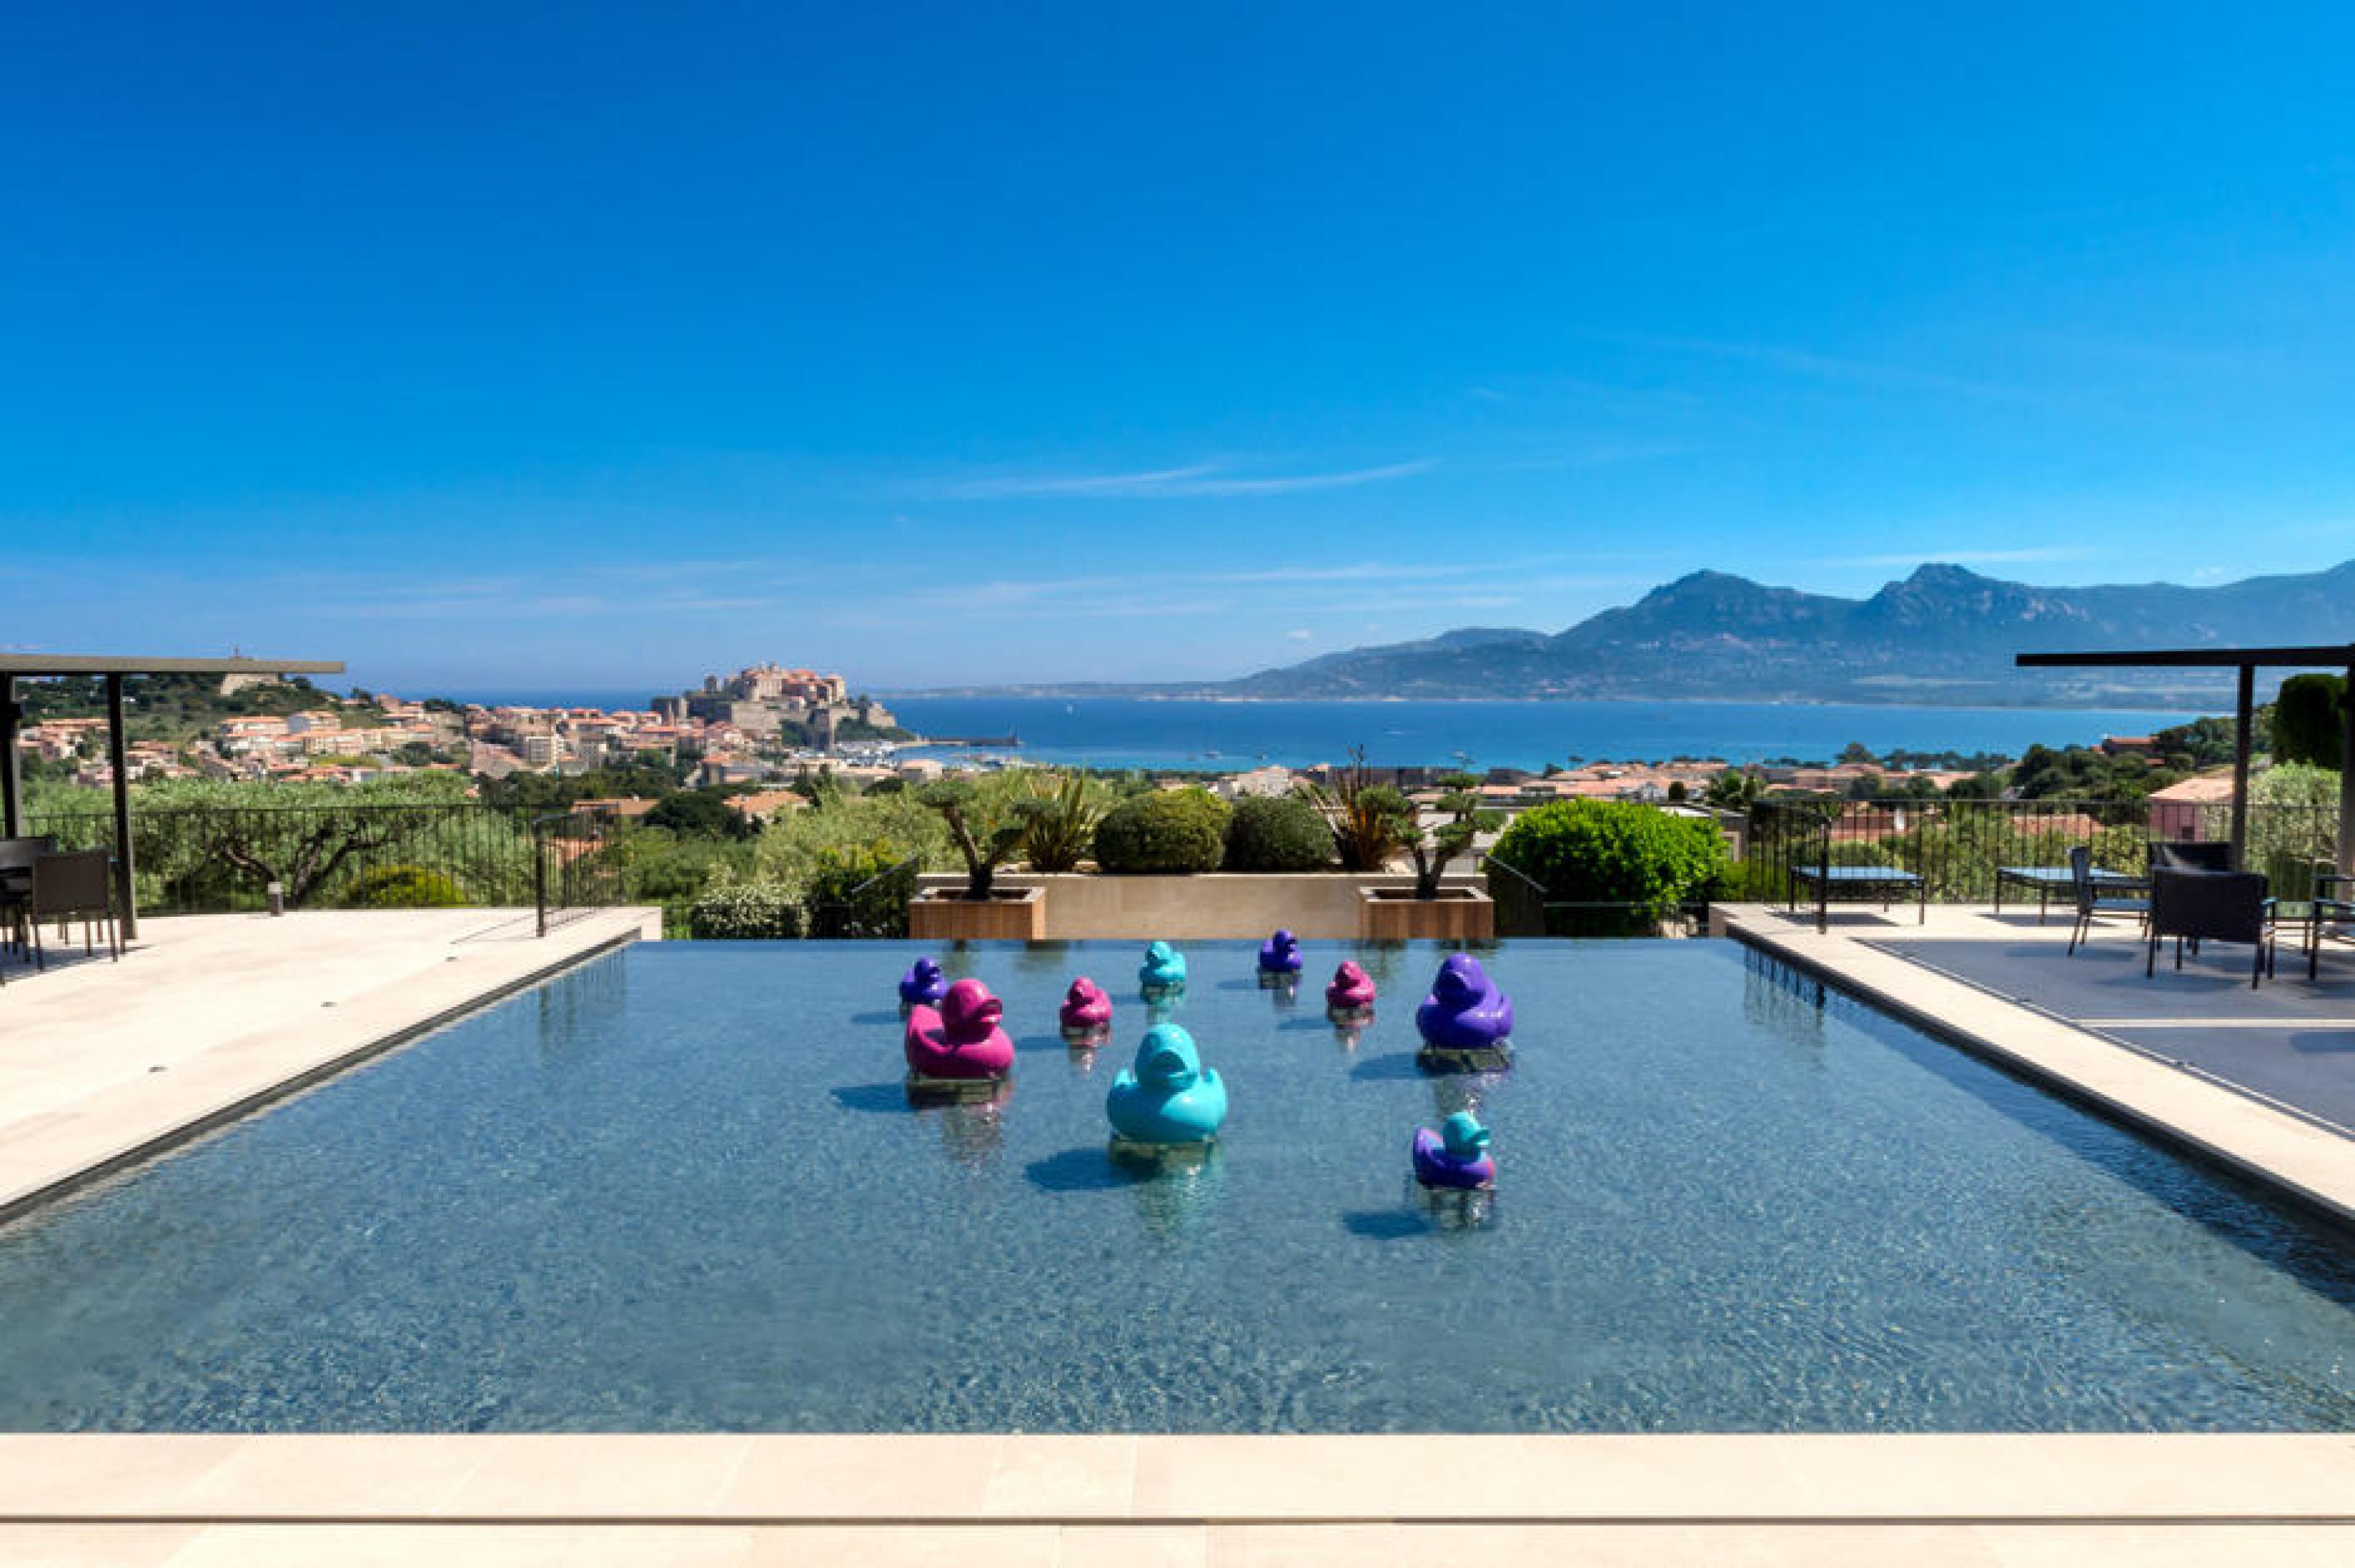 Pool at Hotel La Villa, Corsica, France - Courtesy Fred Oliver